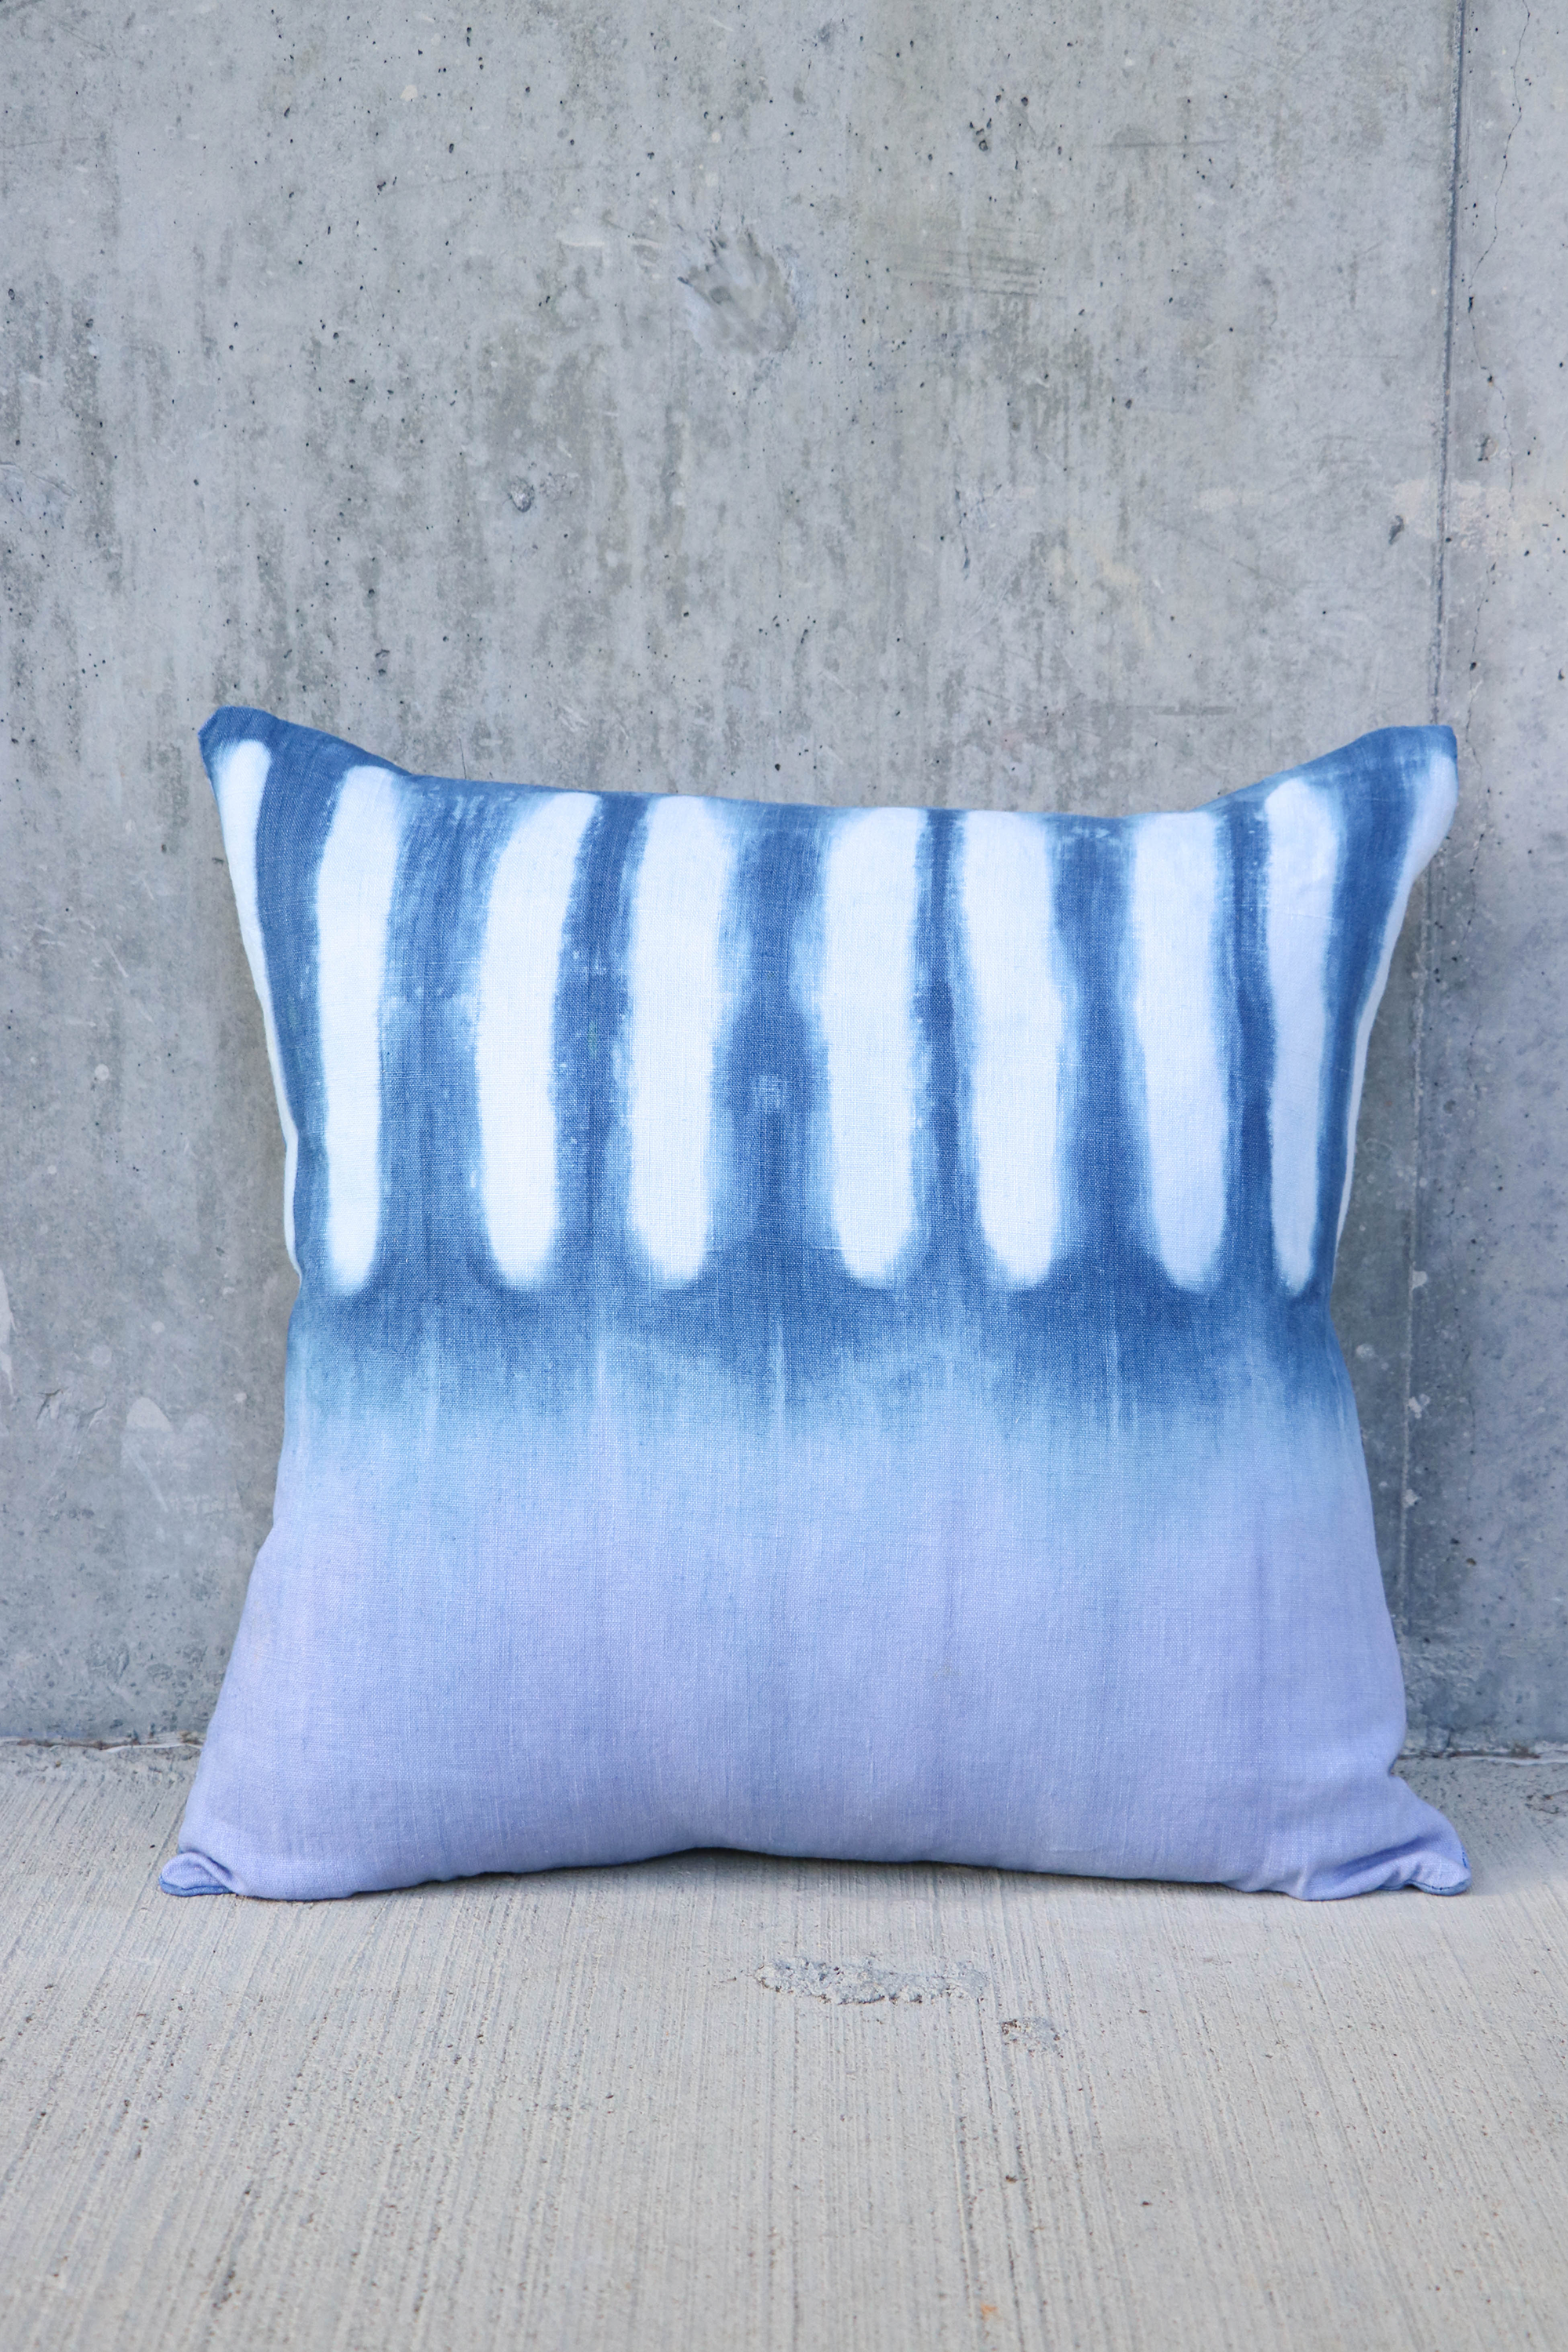 Hand-Dyed Ombré Shibori Pillow